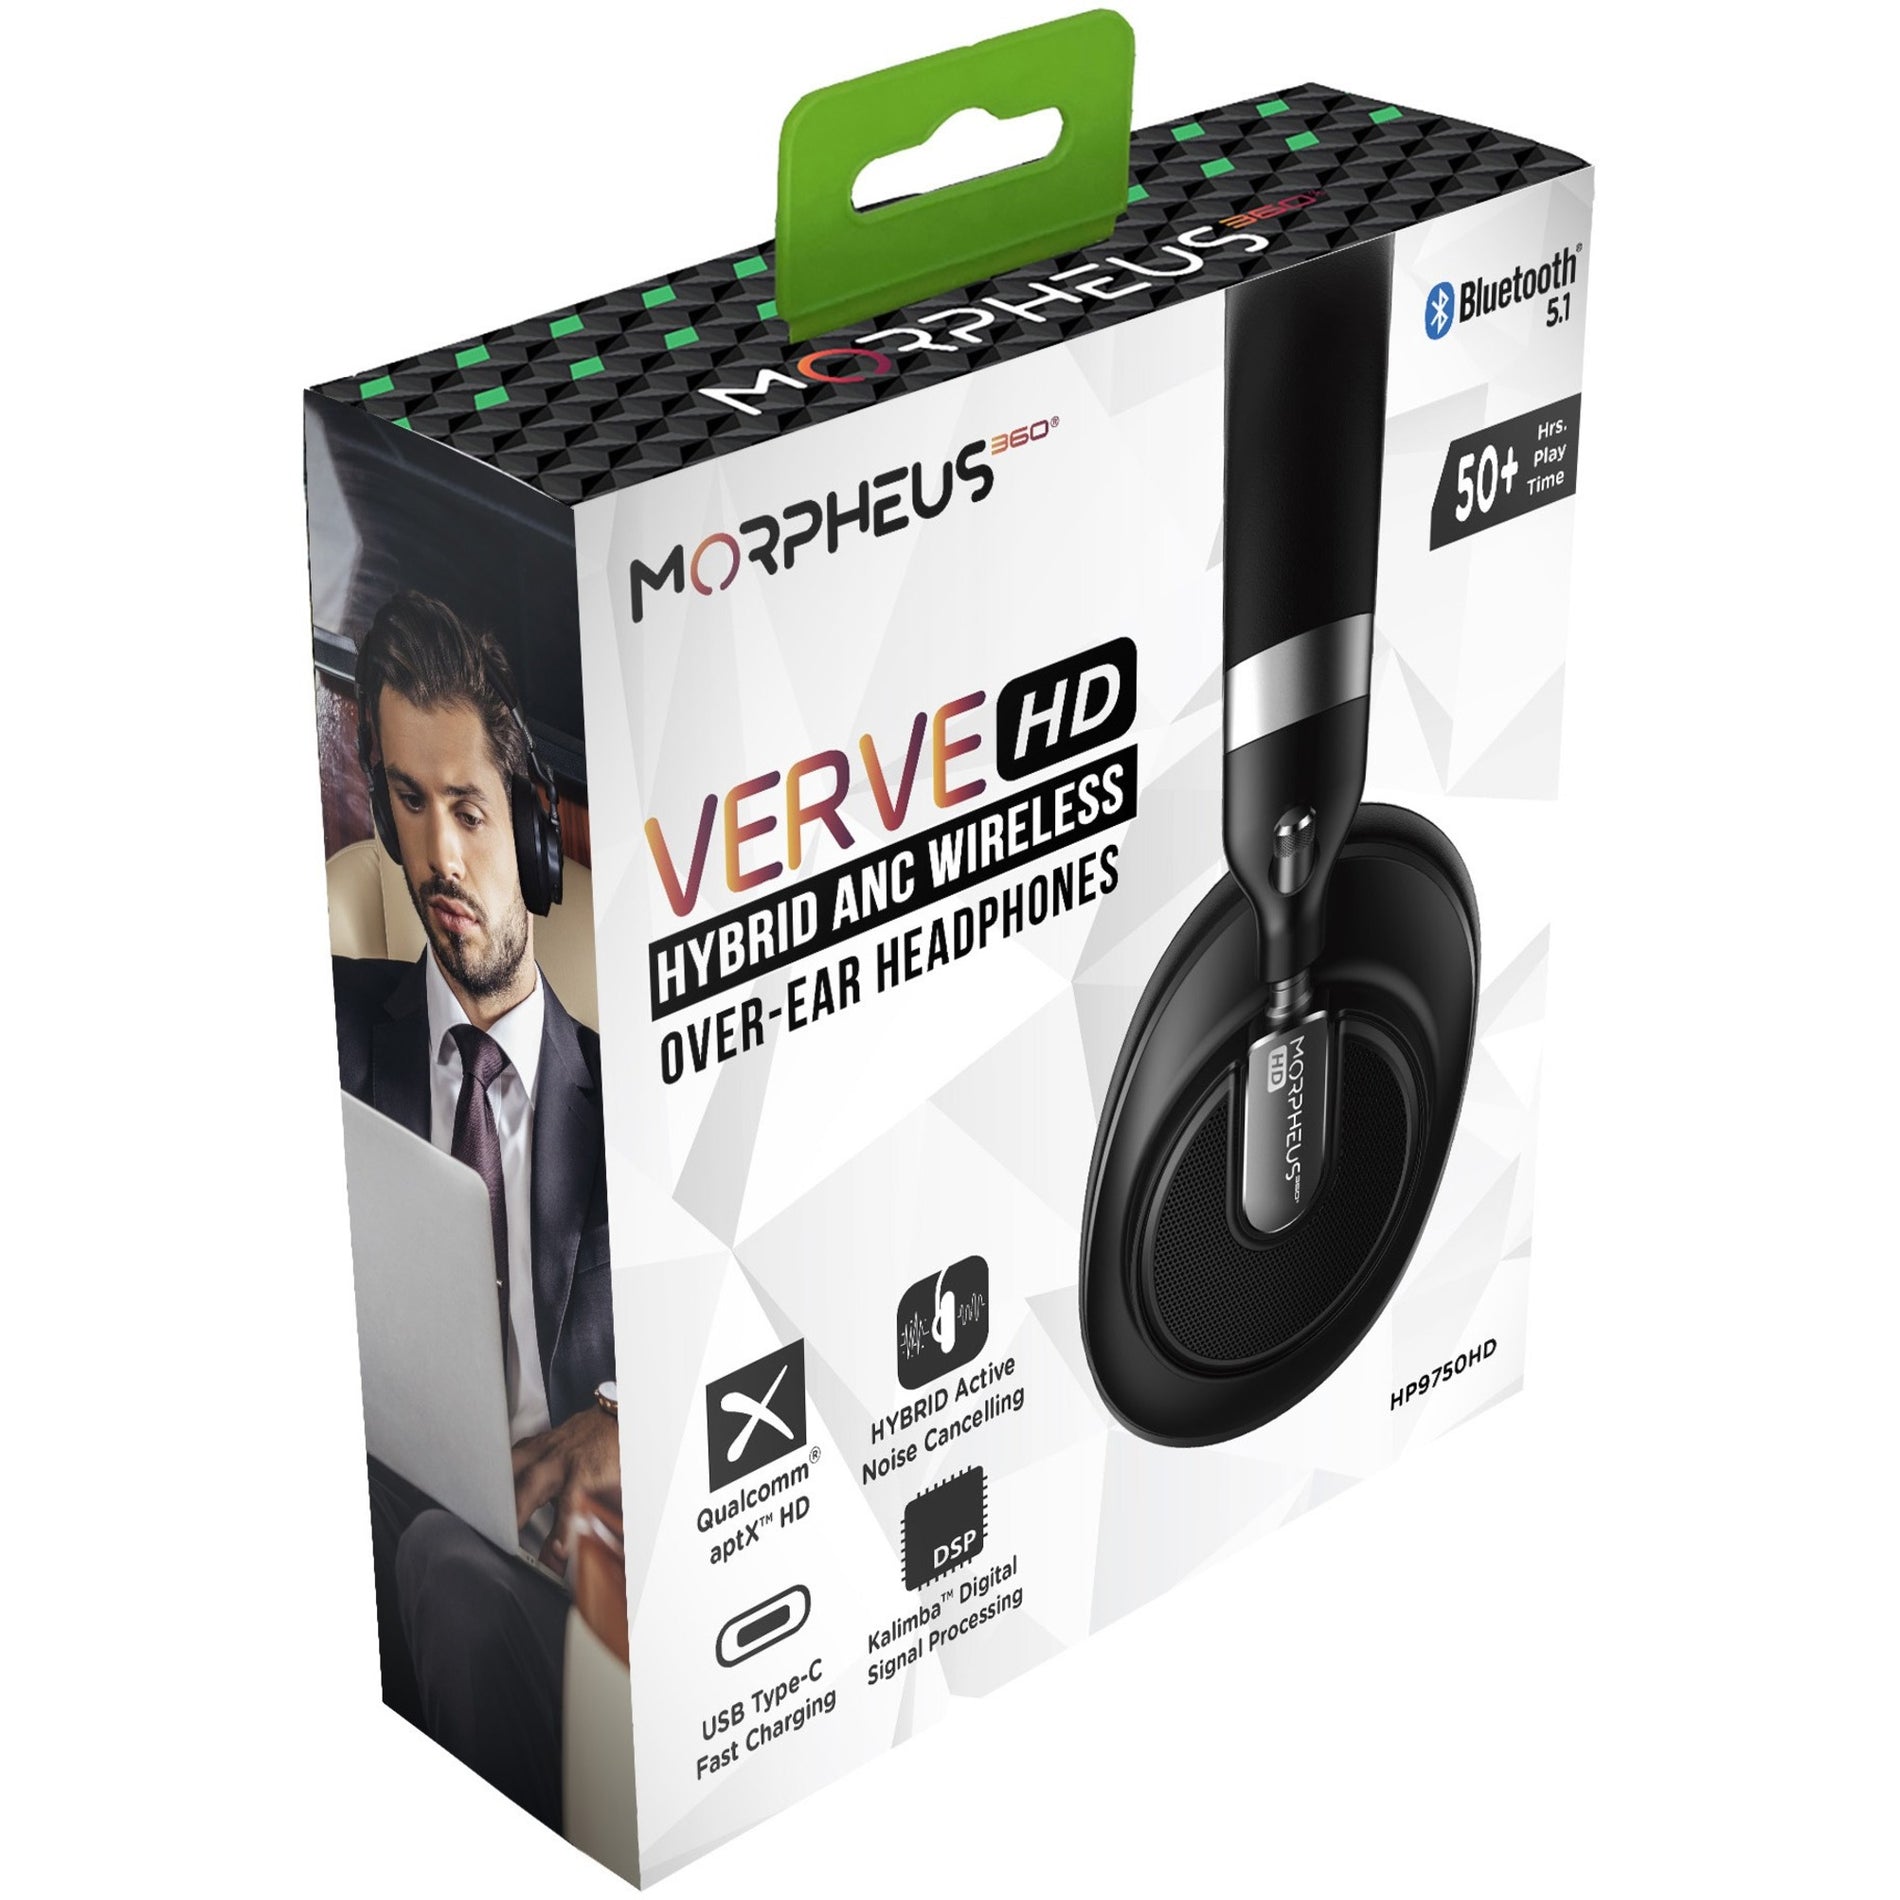 Morpheus 360 HP9750HD VERVE HD Hybrid ANC Wireless Over-Ear Headphones, Platinum/Black, apt-X Technology, USB Charging, Fast Charging